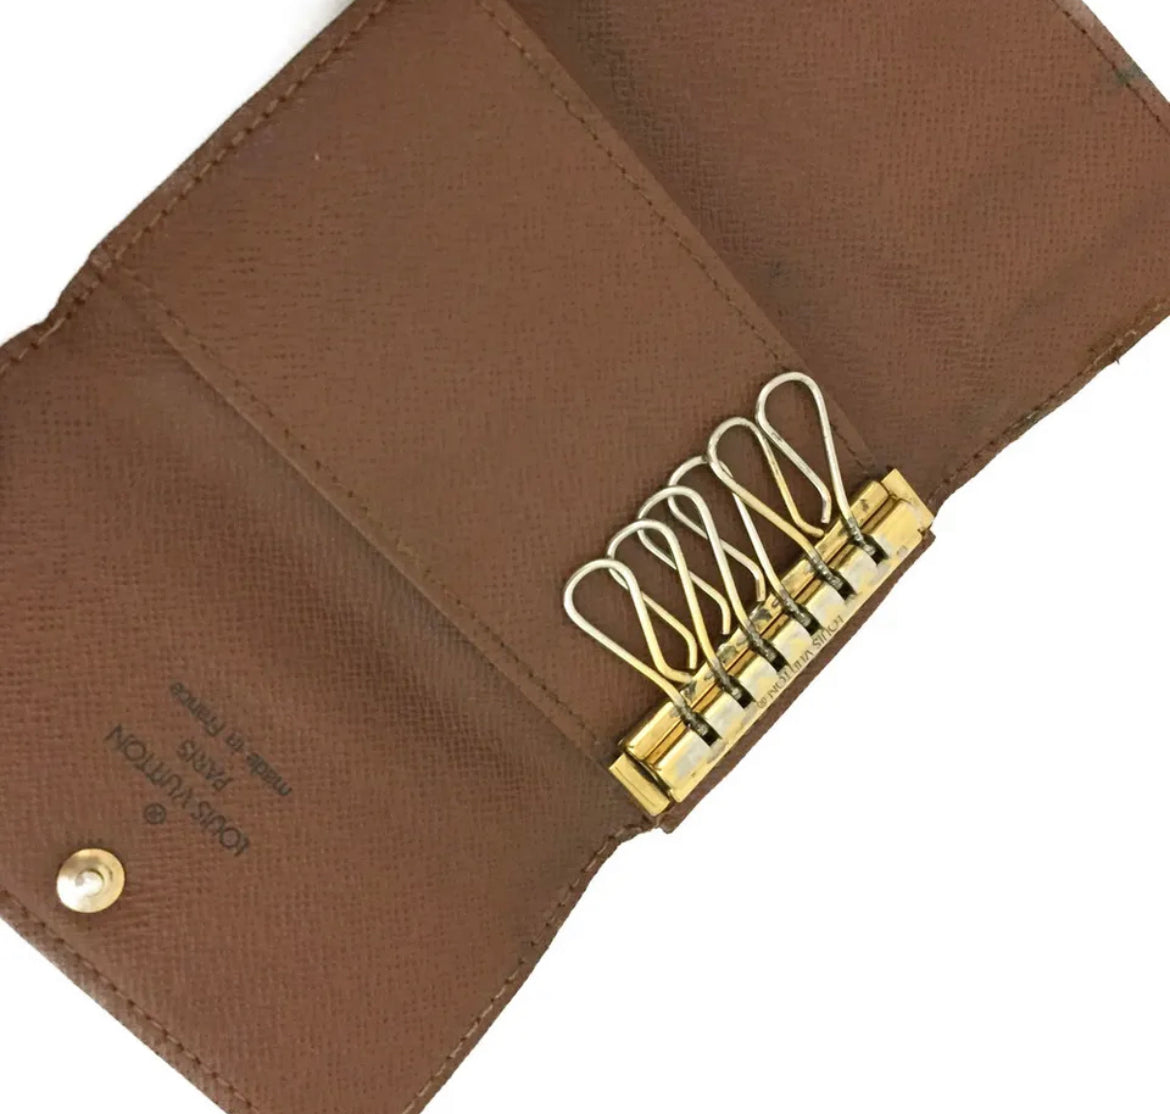 Louis Vuitton Monogram Multicles 6 Ring Key Case